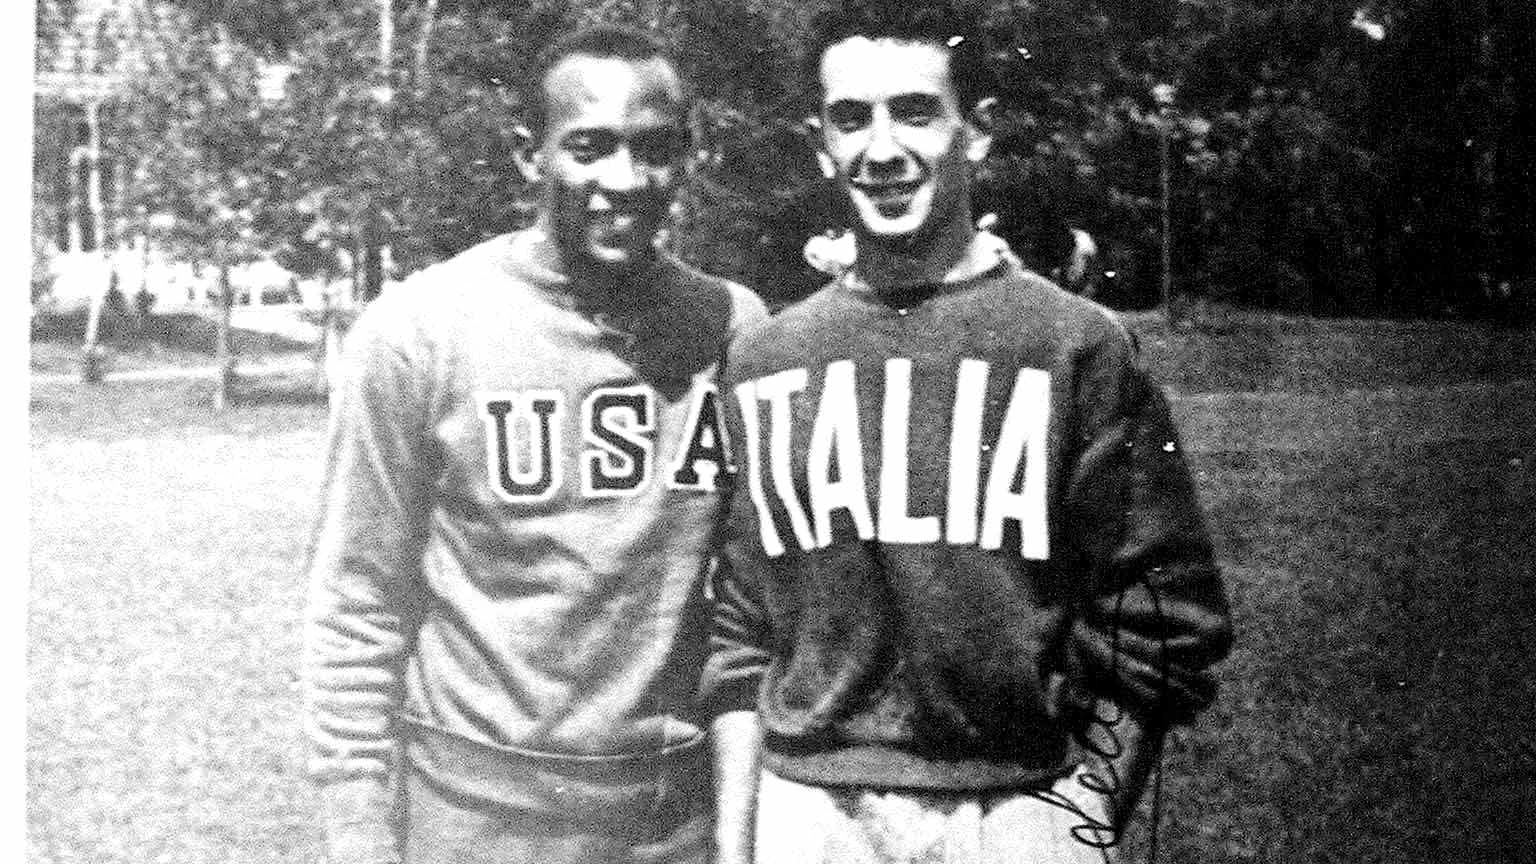 Maffei insieme al campione statunitense Jesse Owens nel 1936